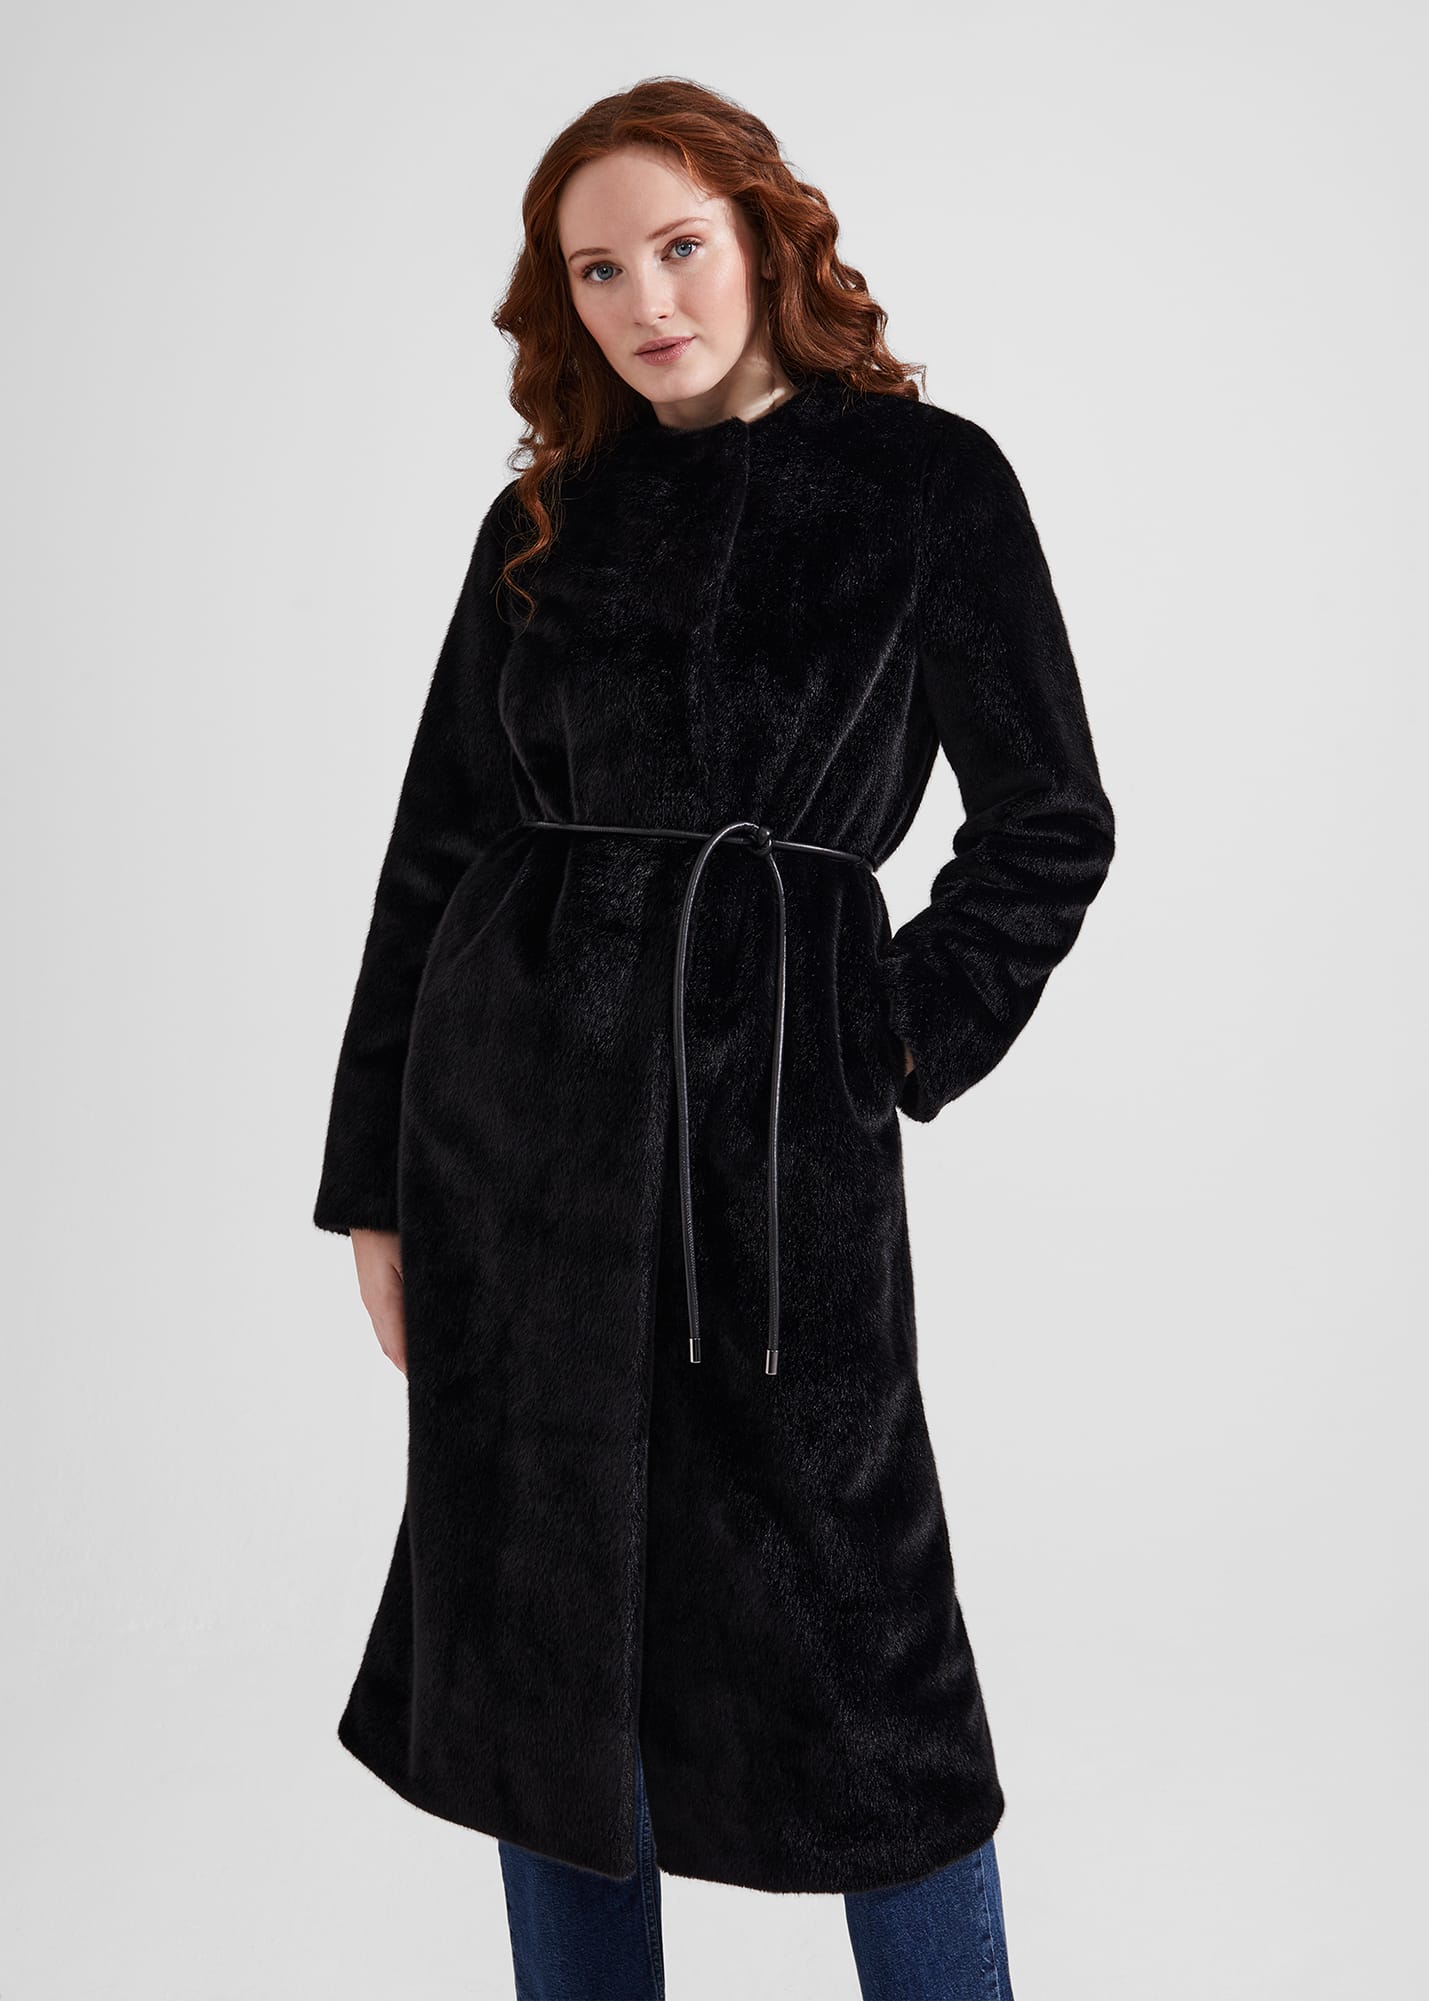 Hobbs Women's Robin Faux Fur Coat - Black